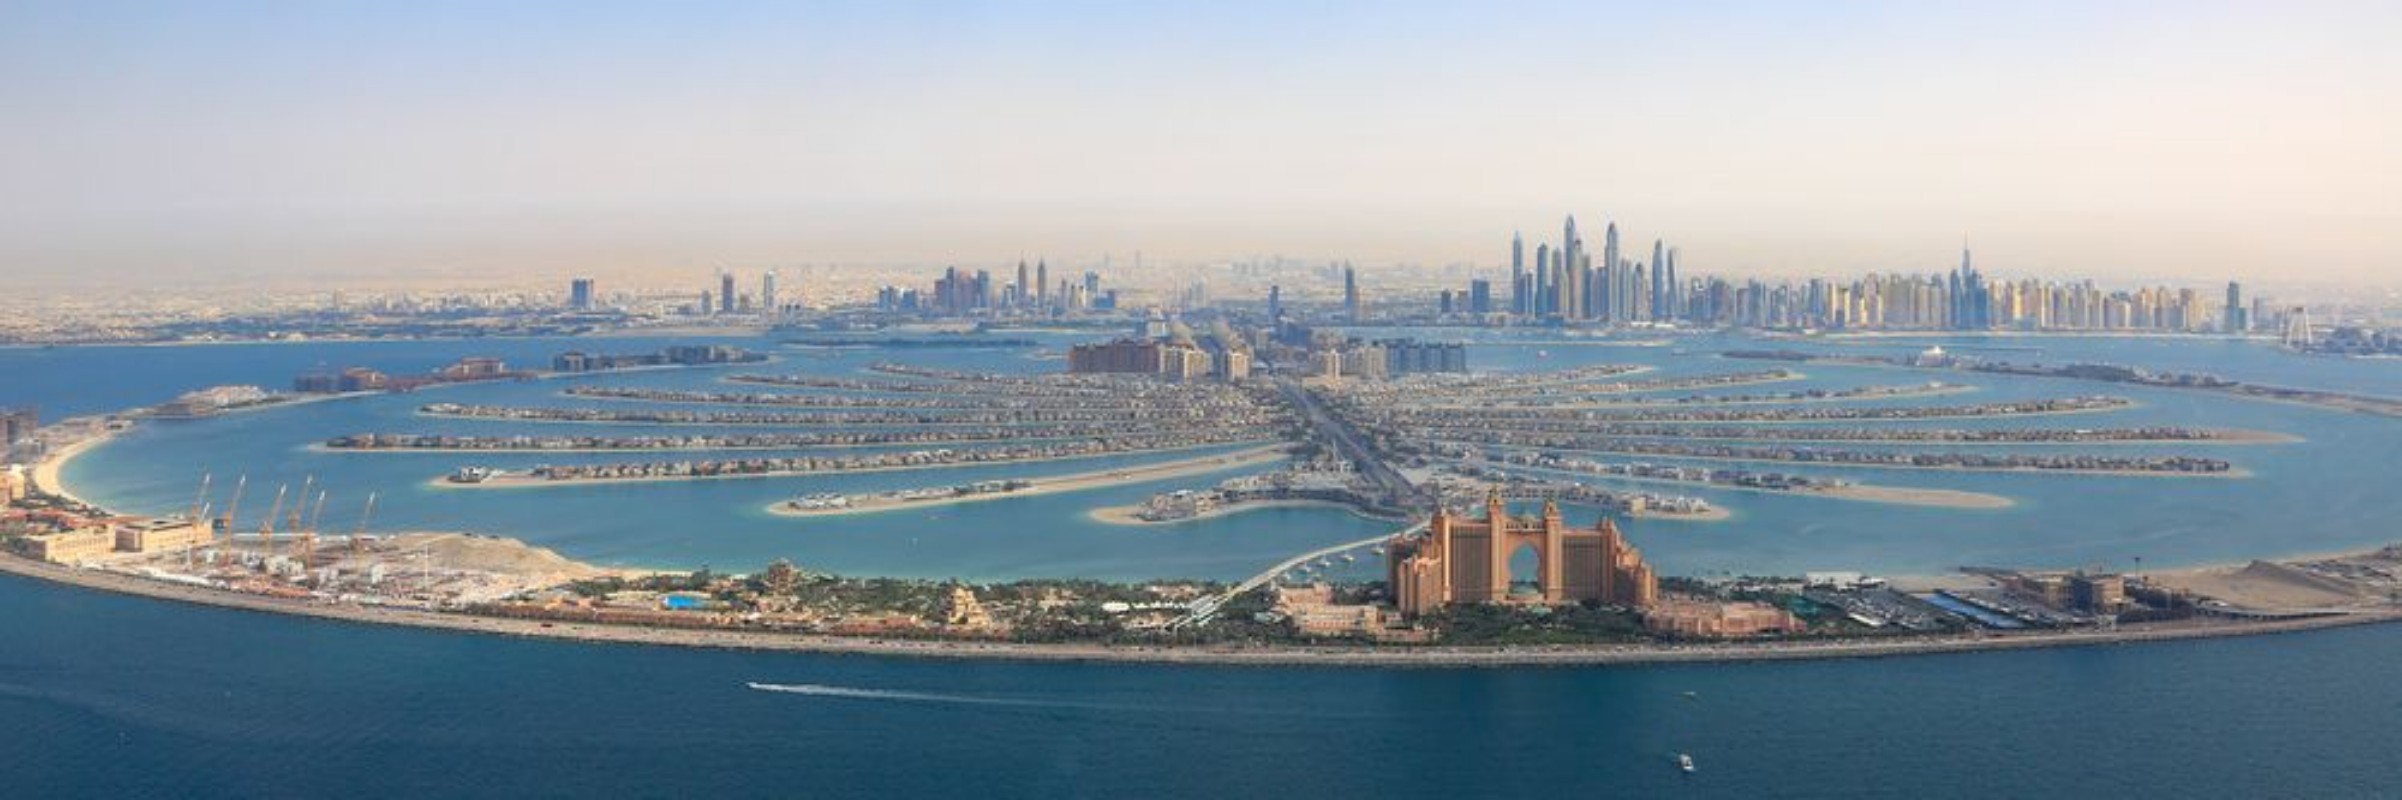 Image de Dubai The Palm Jumeirah Palme Insel Atlantis Hotel Panorama Marina Luftaufnahme Luftbild